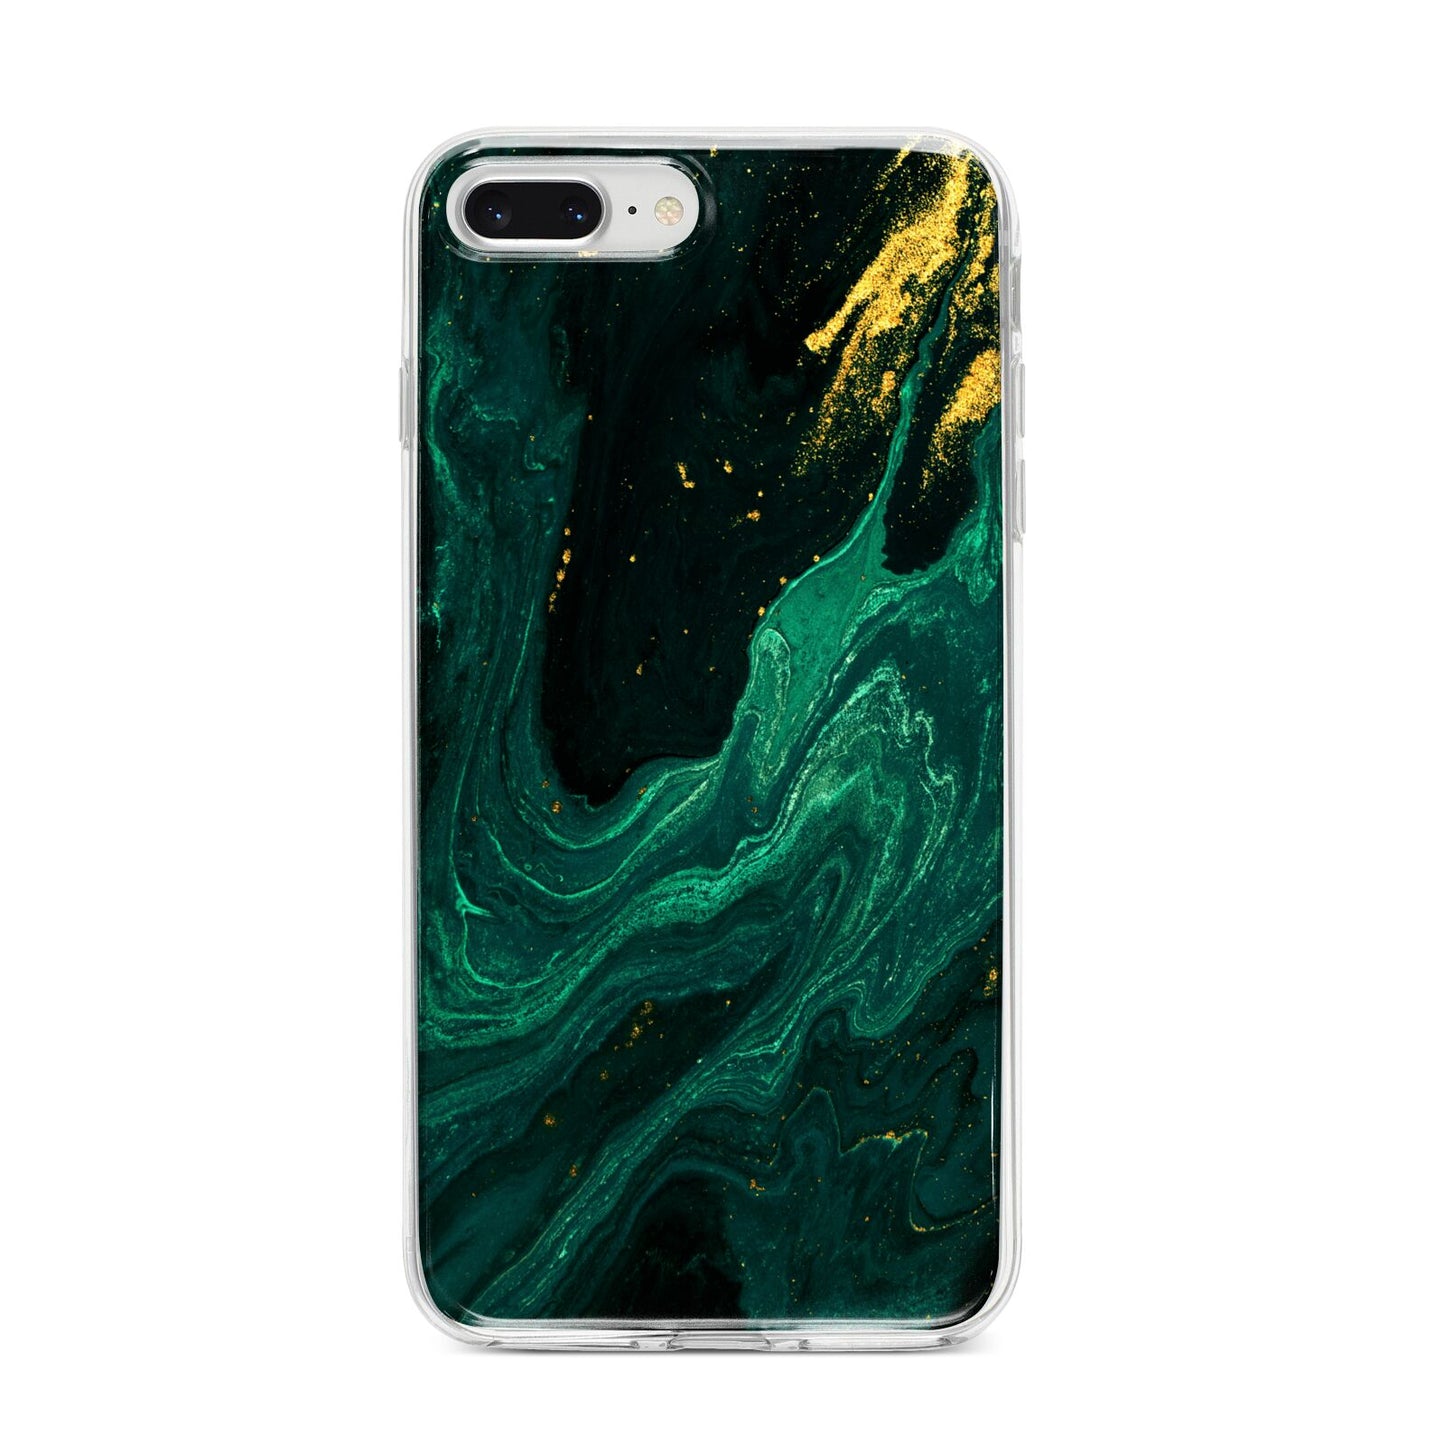 Emerald Green iPhone 8 Plus Bumper Case on Silver iPhone